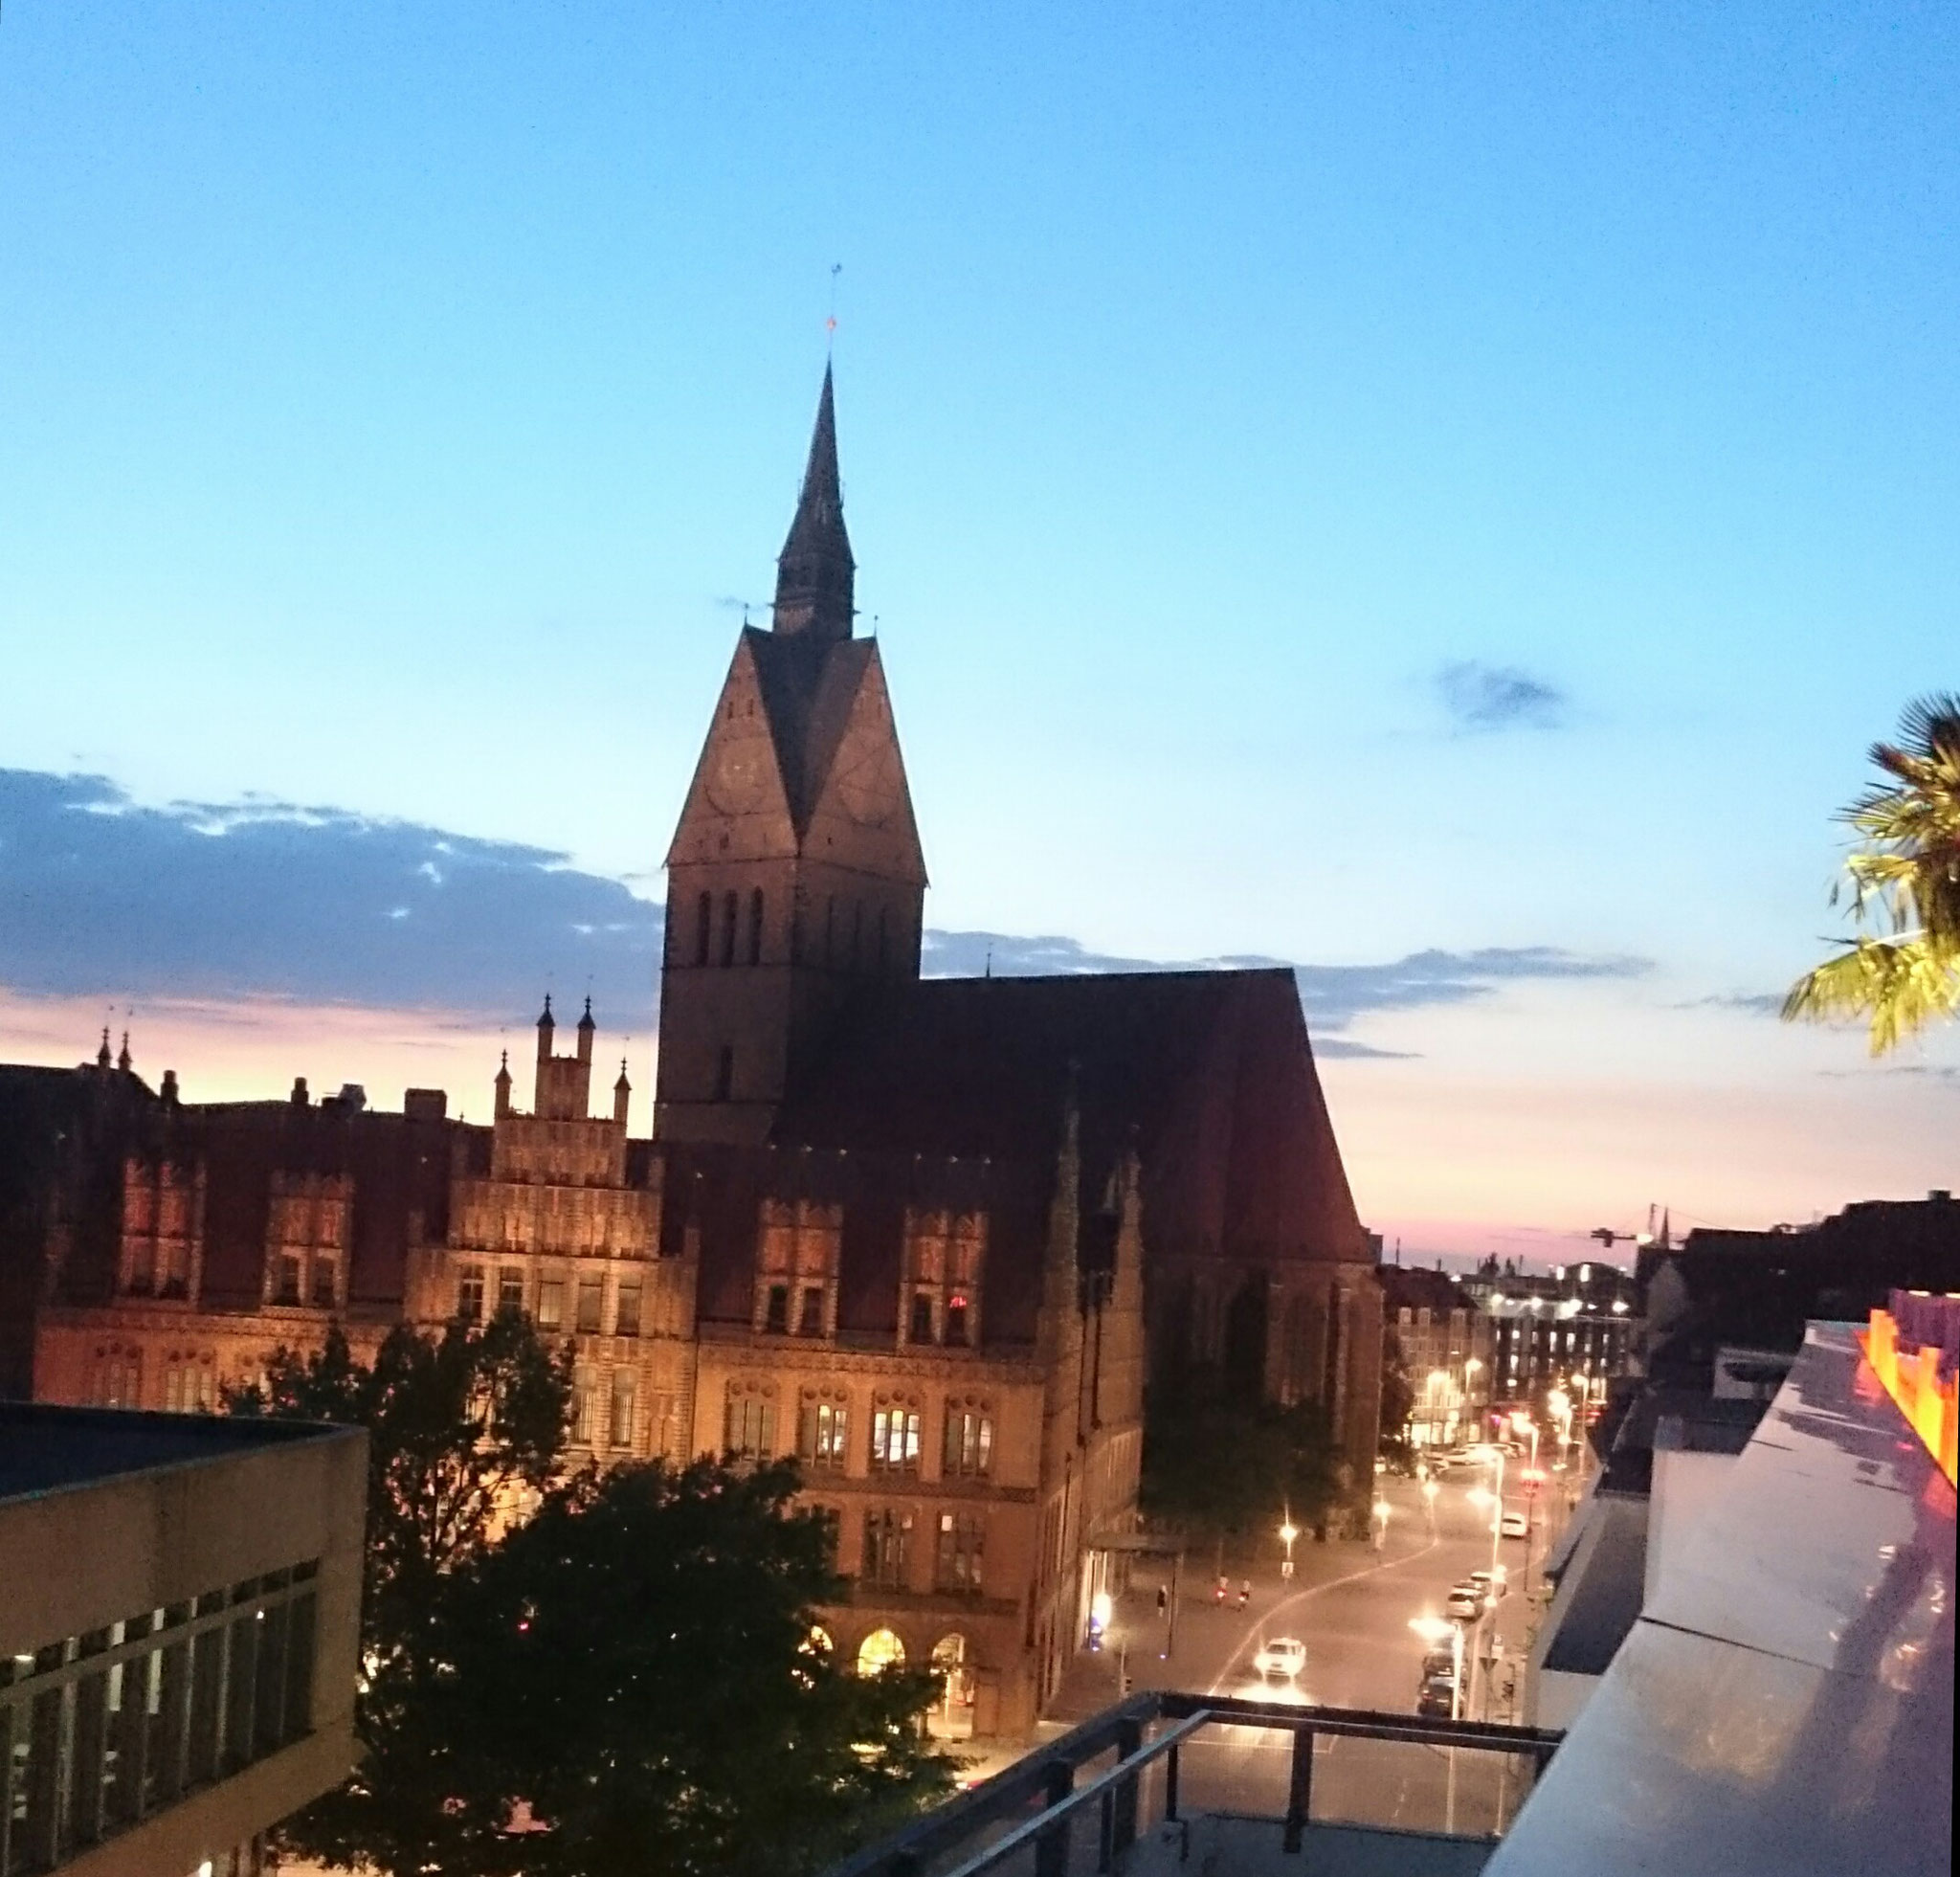 Marktkirche by night